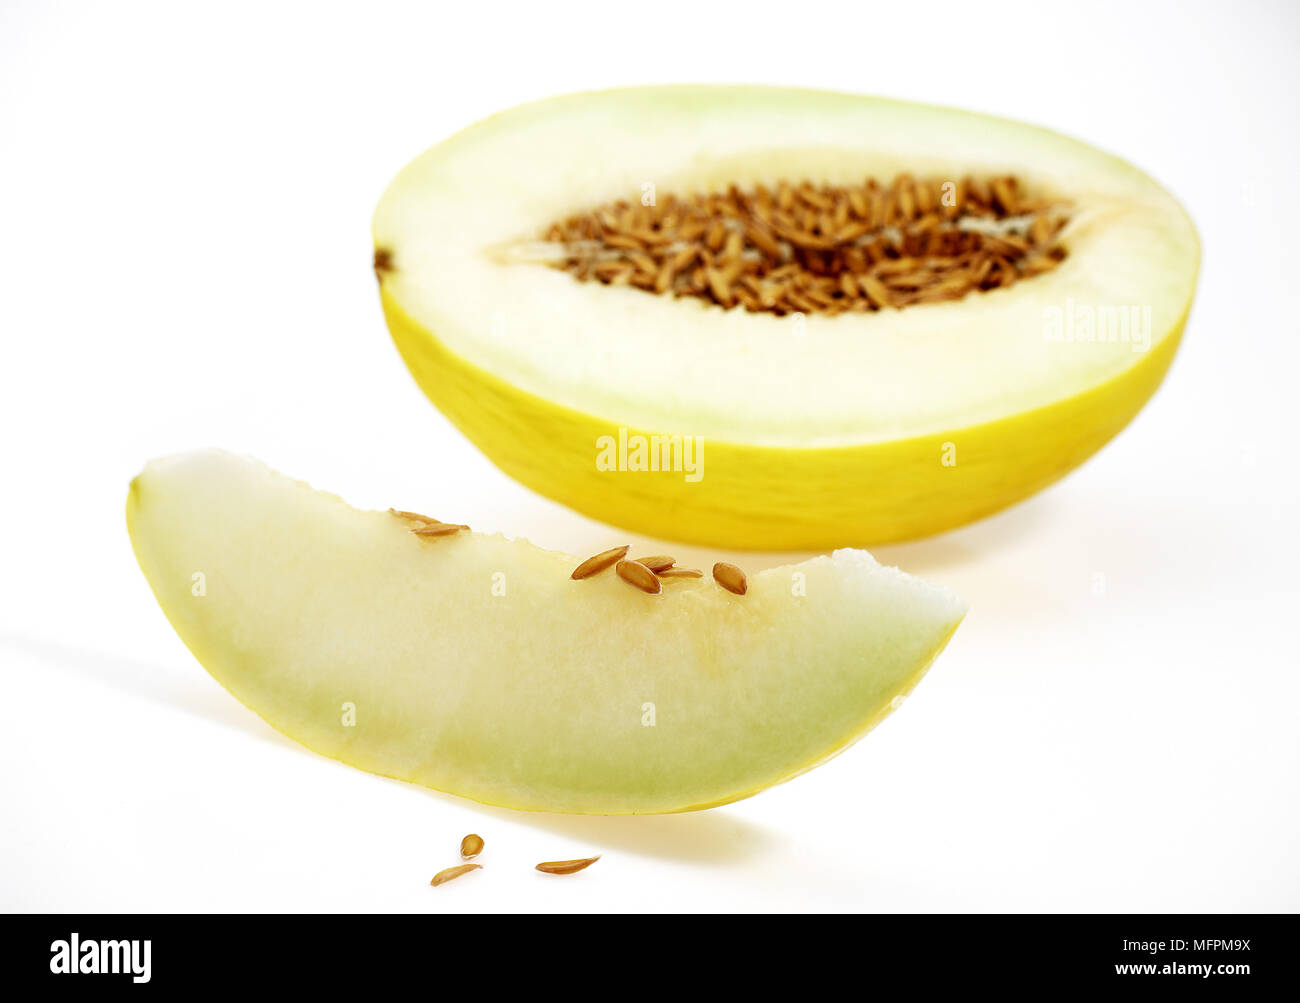 Yellow Spanish Melon, cucumis melo, Fruit against White Background Stock Photo